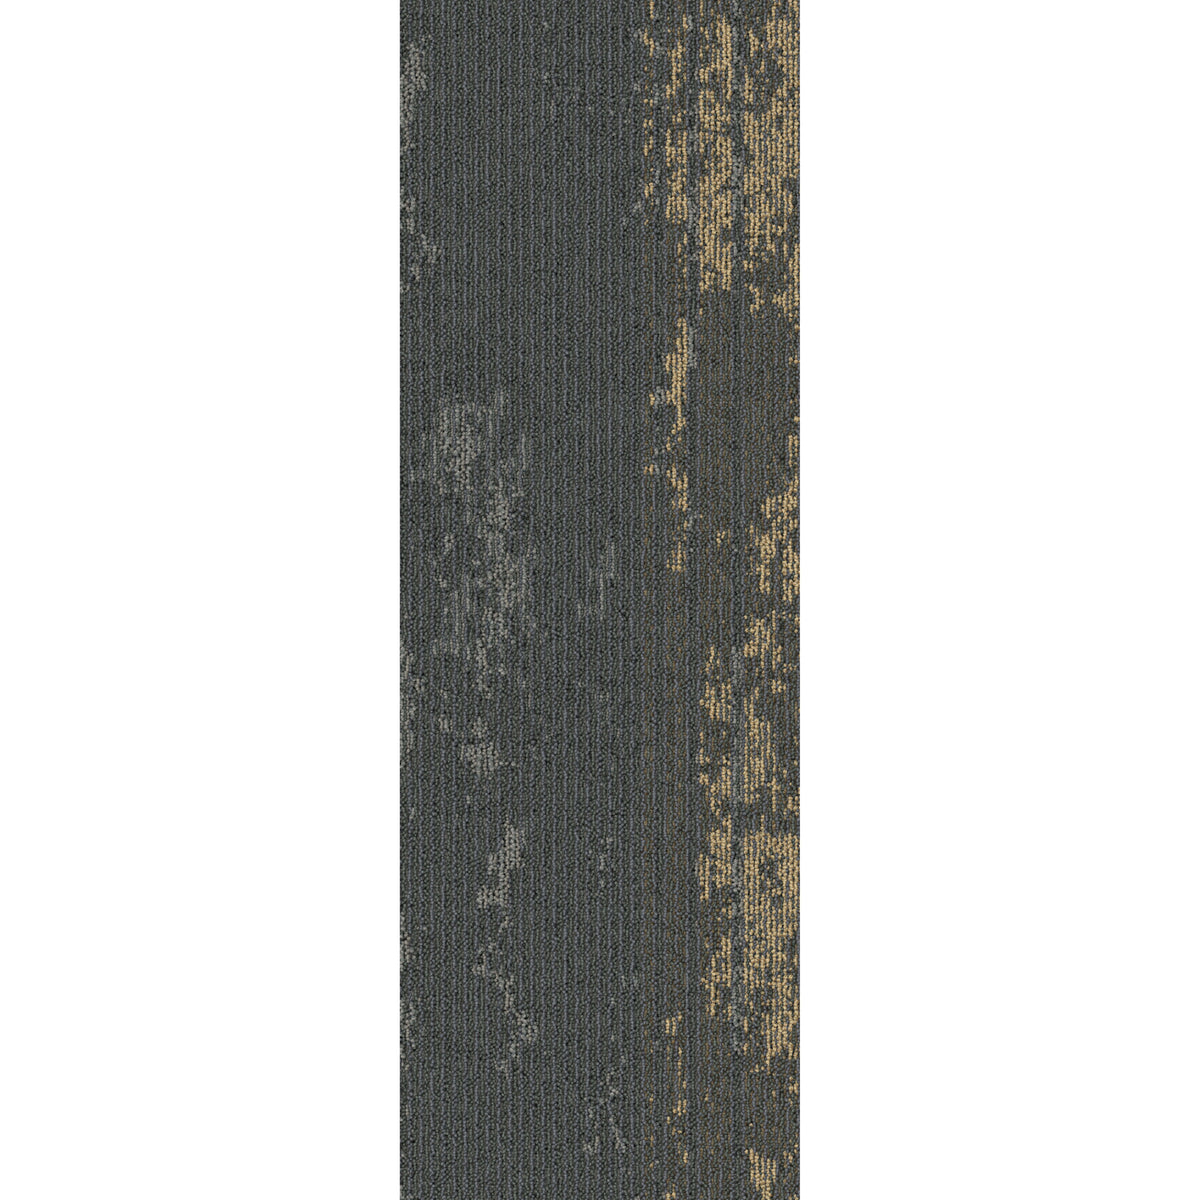 Mohawk Group - Iconic Earth - Metalmorphic - Carpet Tile - Solid Ground Metalli